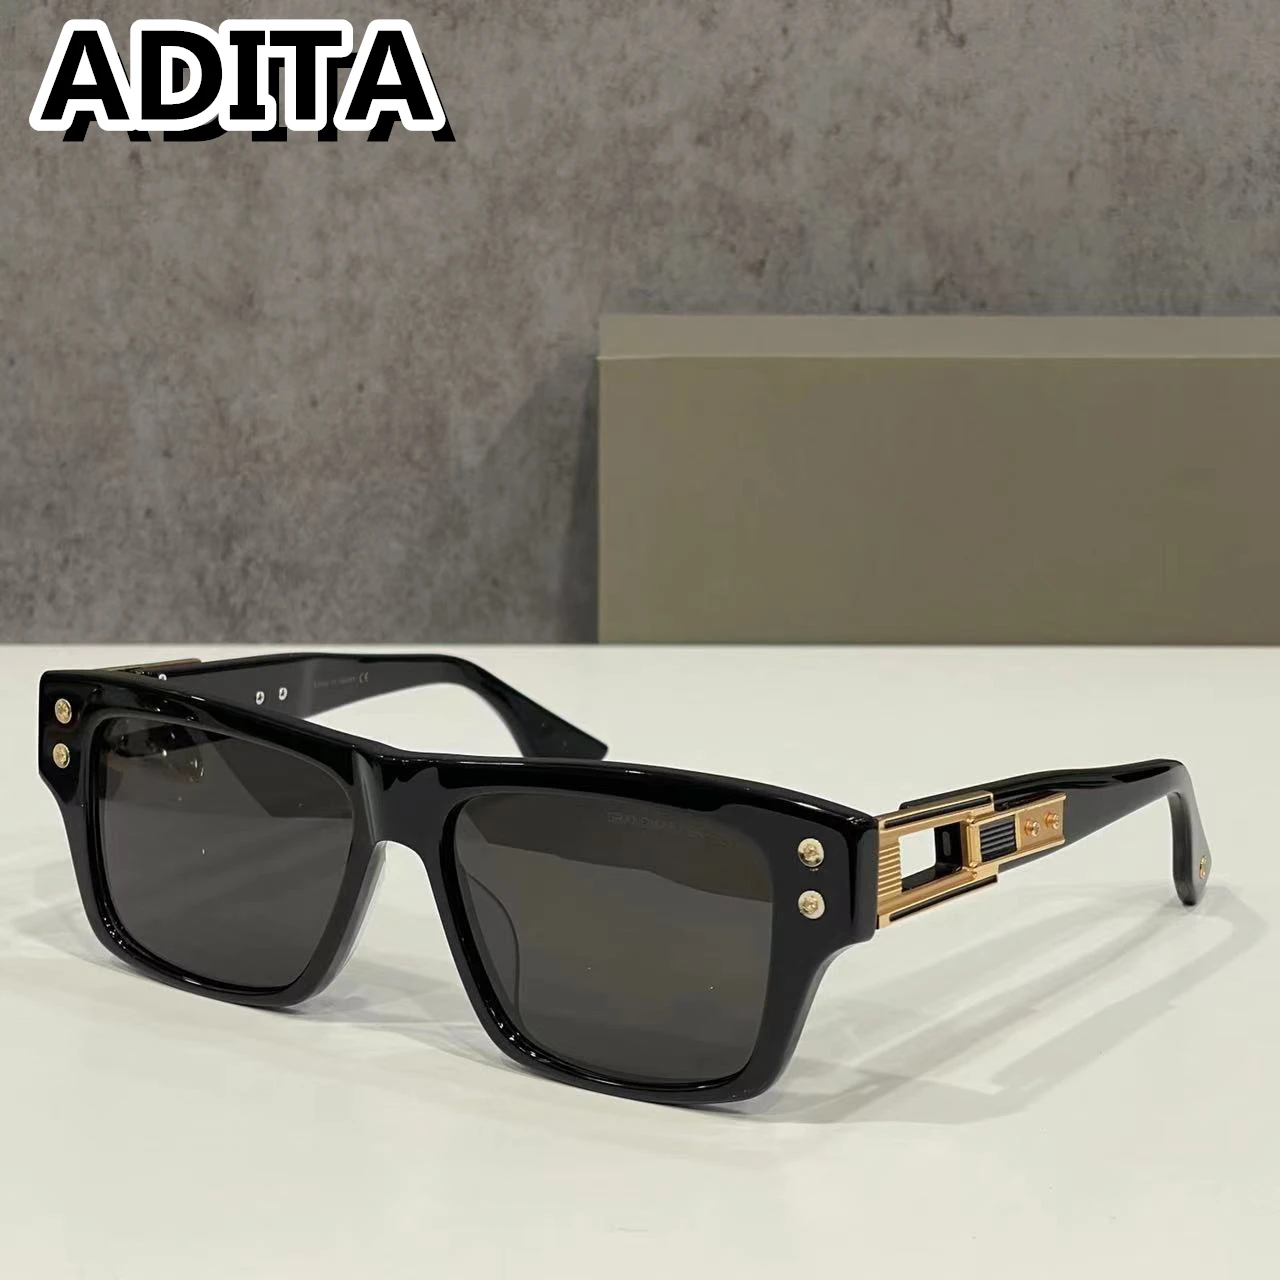 A DITA GRANDMASTER SEVEN Top High Quality Sunglasses for Men Titanium Style Fashion Design Sunglasses for Womens  with box